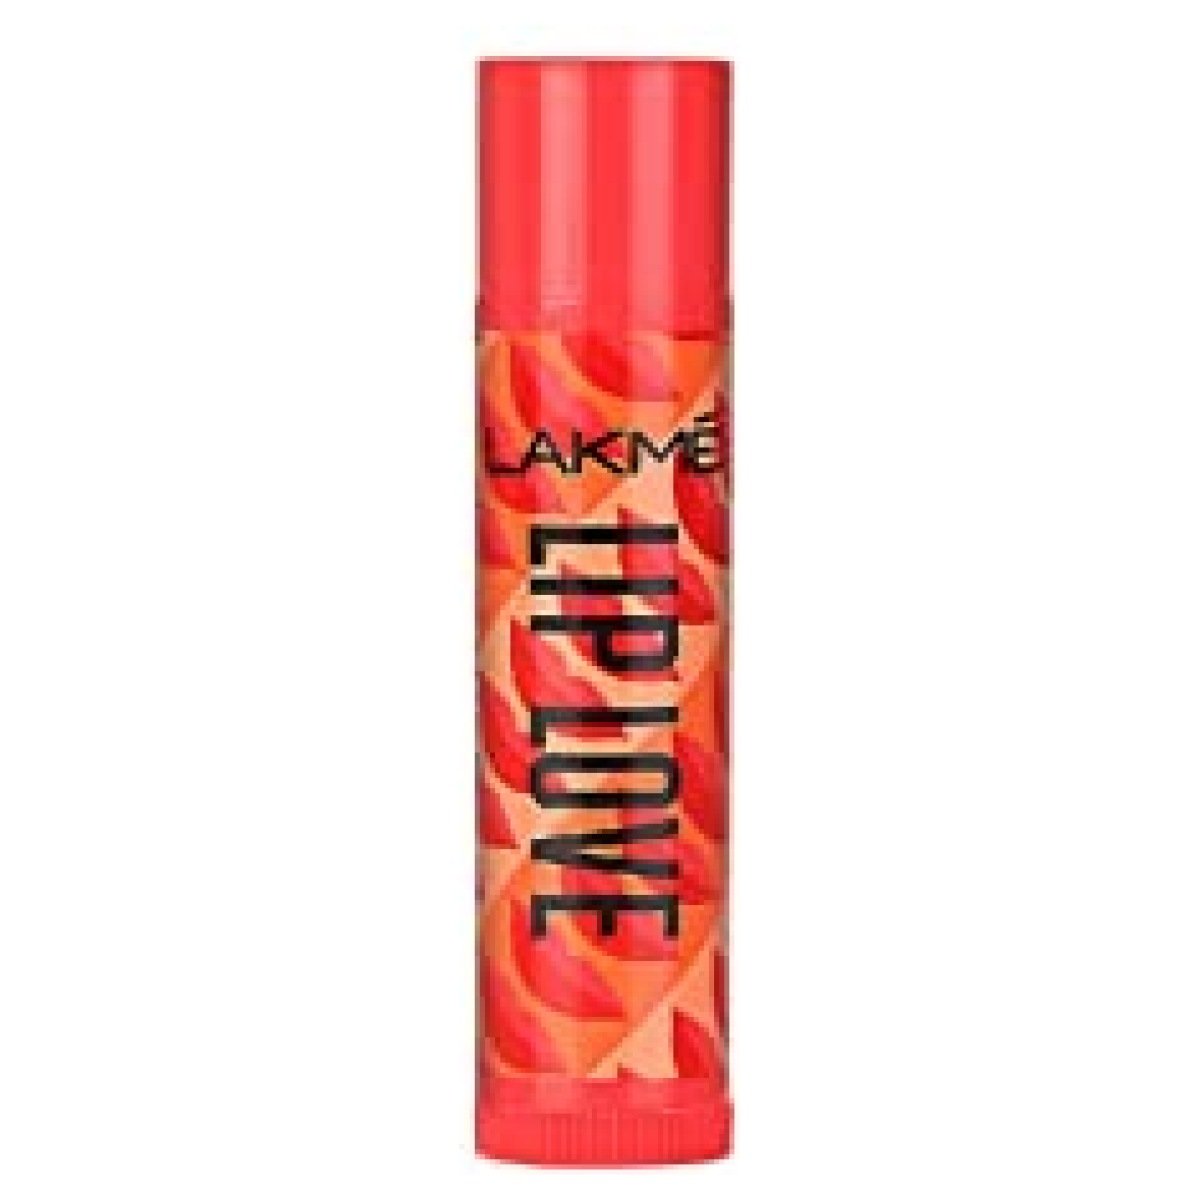 Lakme Lip Love Chapstick - Apricot, 4.5 g